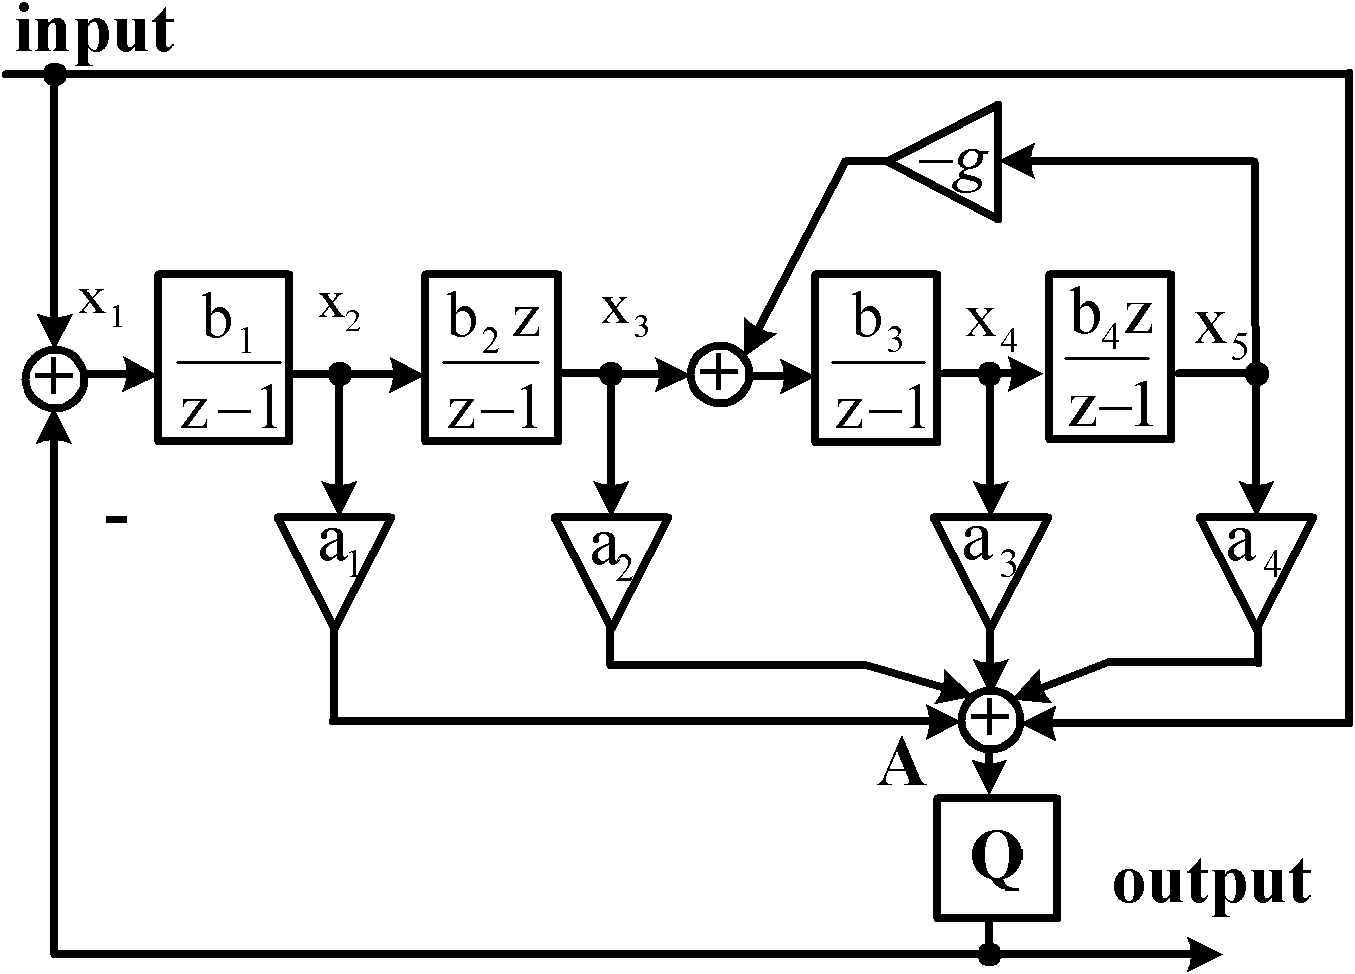 Low-power-consumption two-step feedforward adder circuit